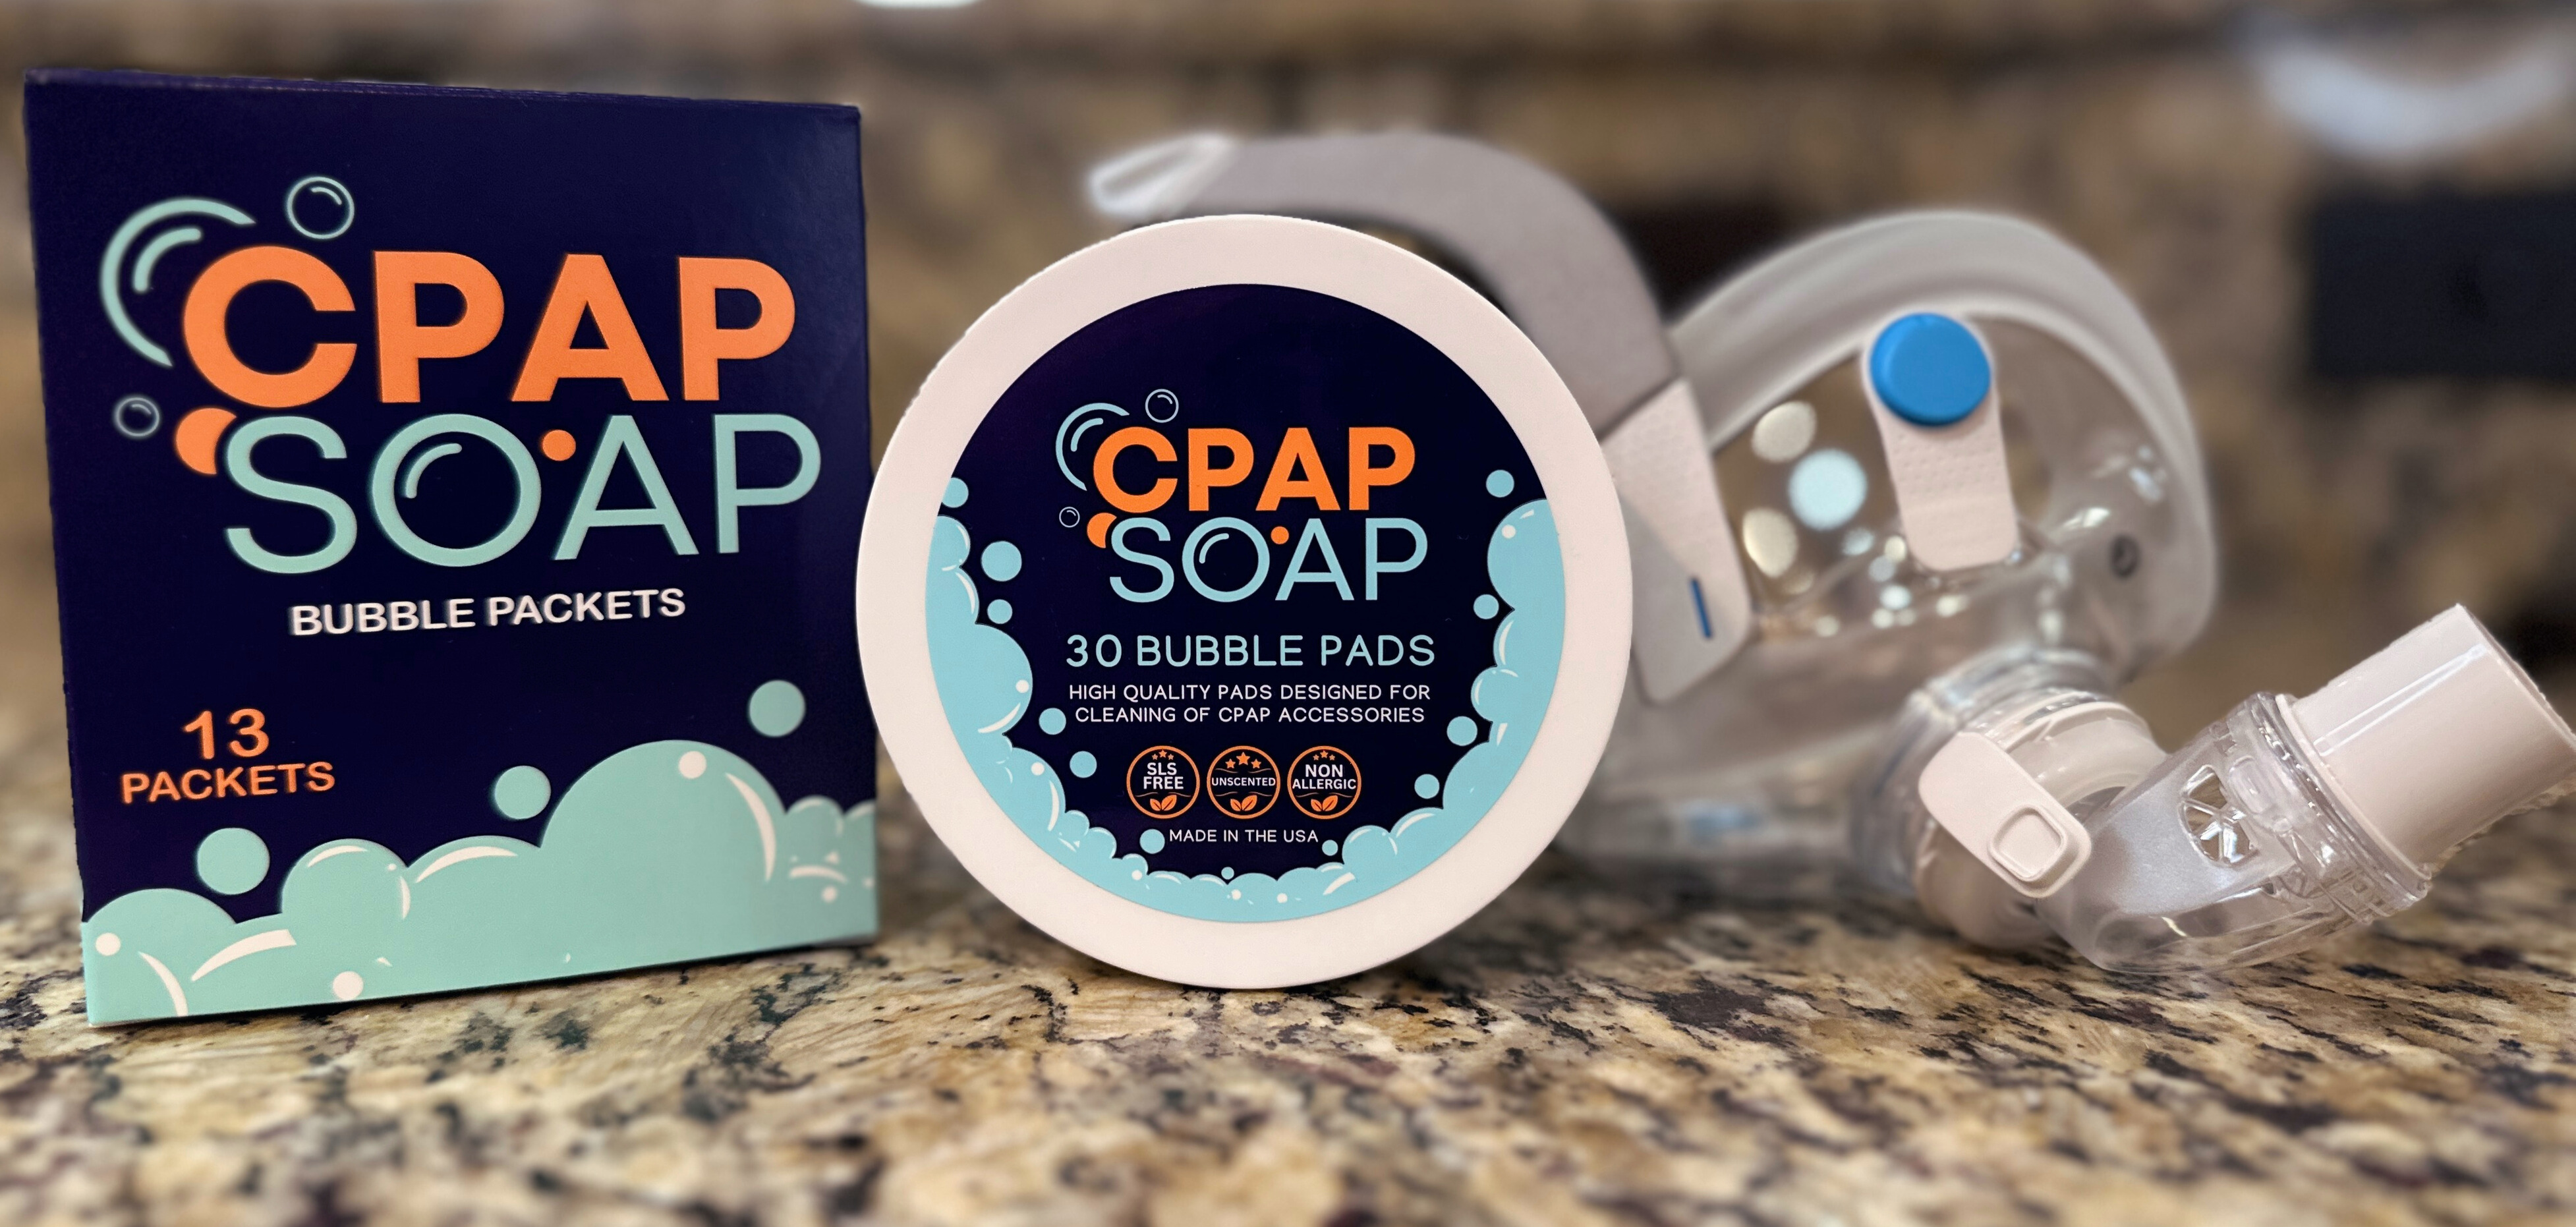 Product Image Retail Boxes and Jar of Liviliti Soap